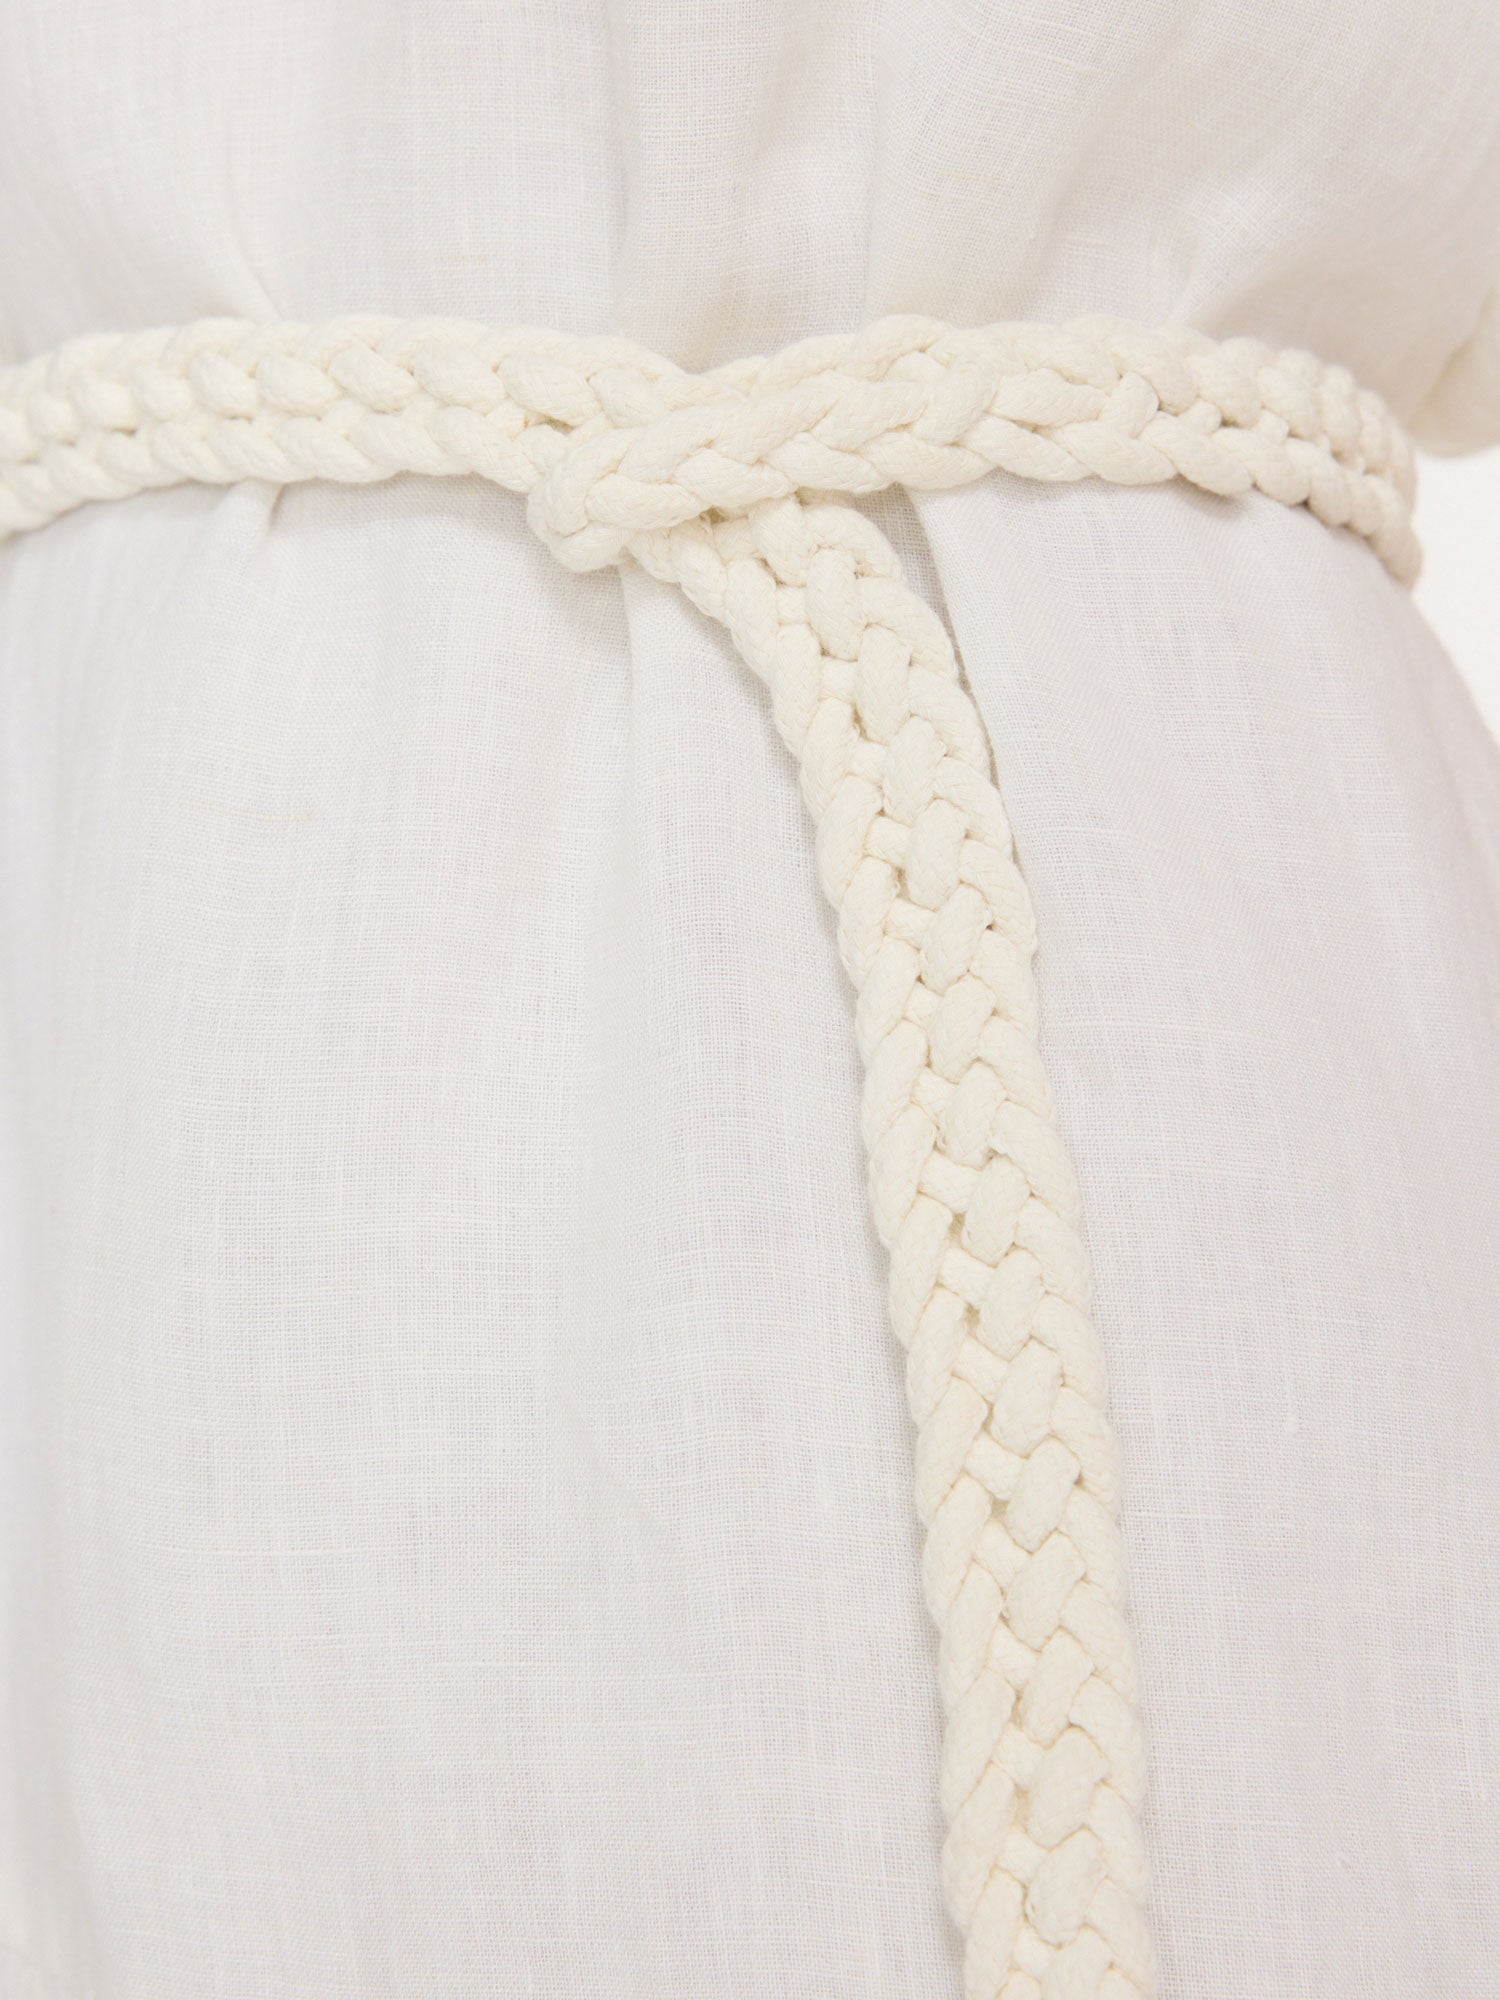 Macrame natural cotton belt coiled close up 2